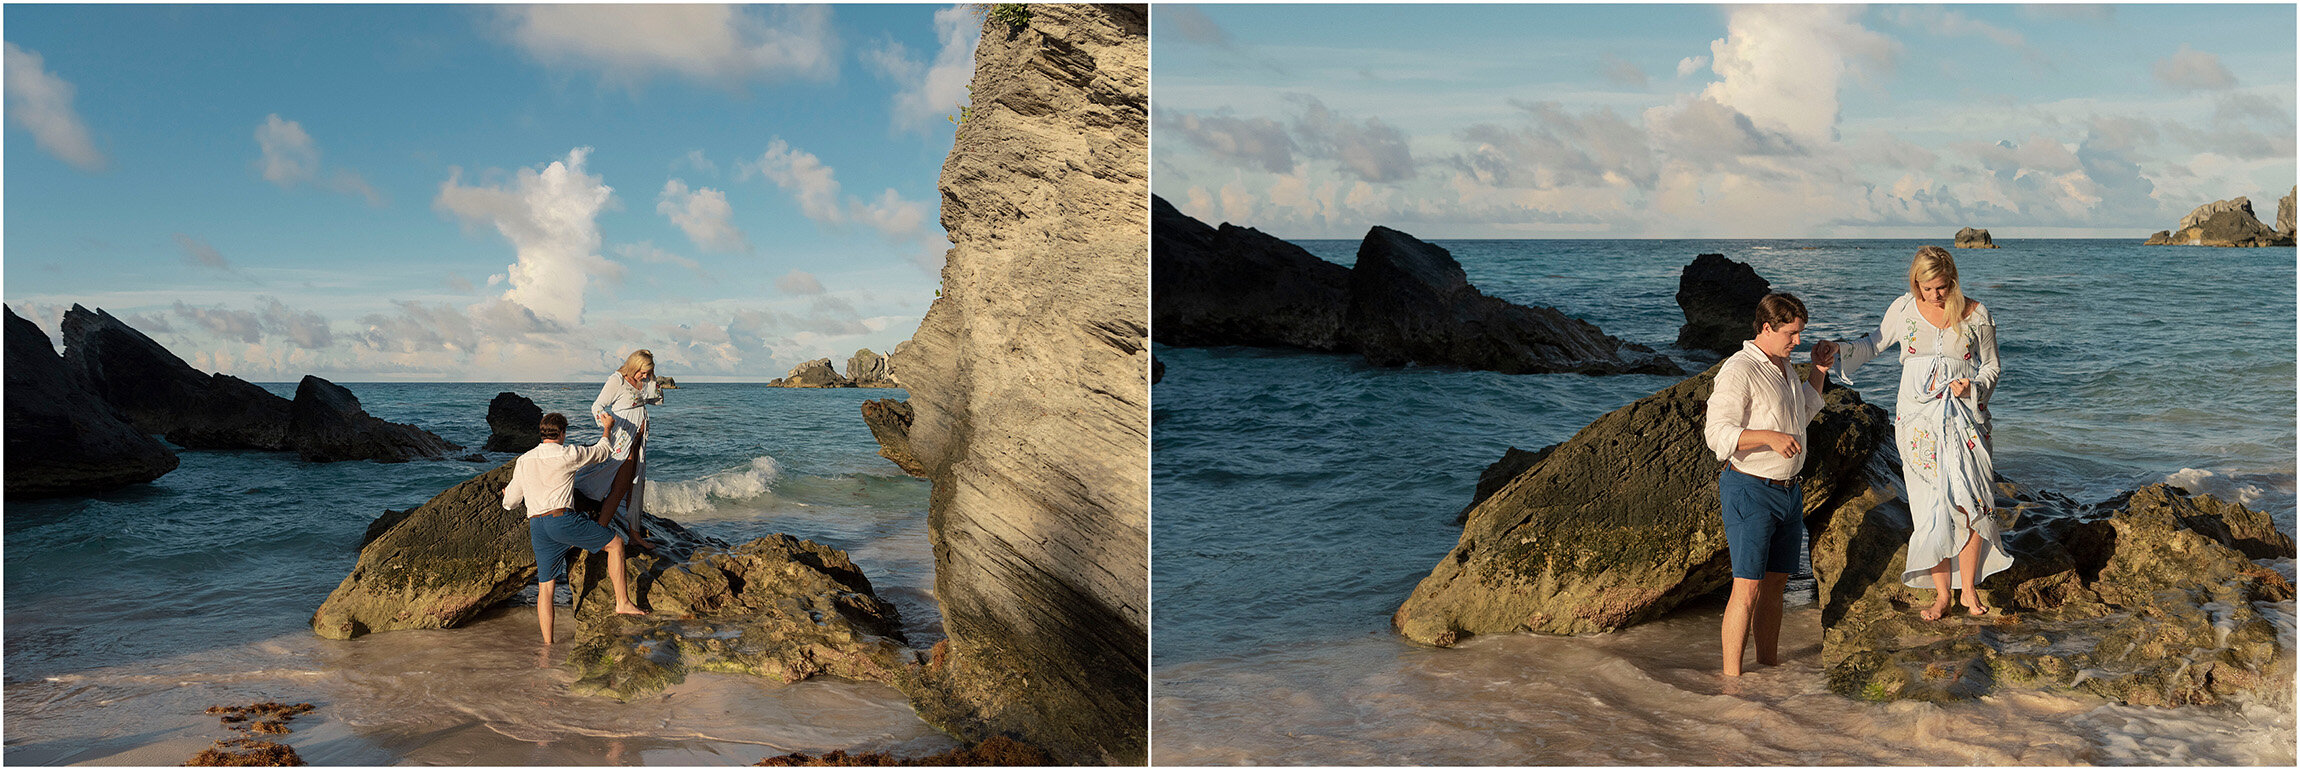 ©FianderFoto_Bermuda Maternity Photographer_Horseshoe Bay Beach_021.jpg